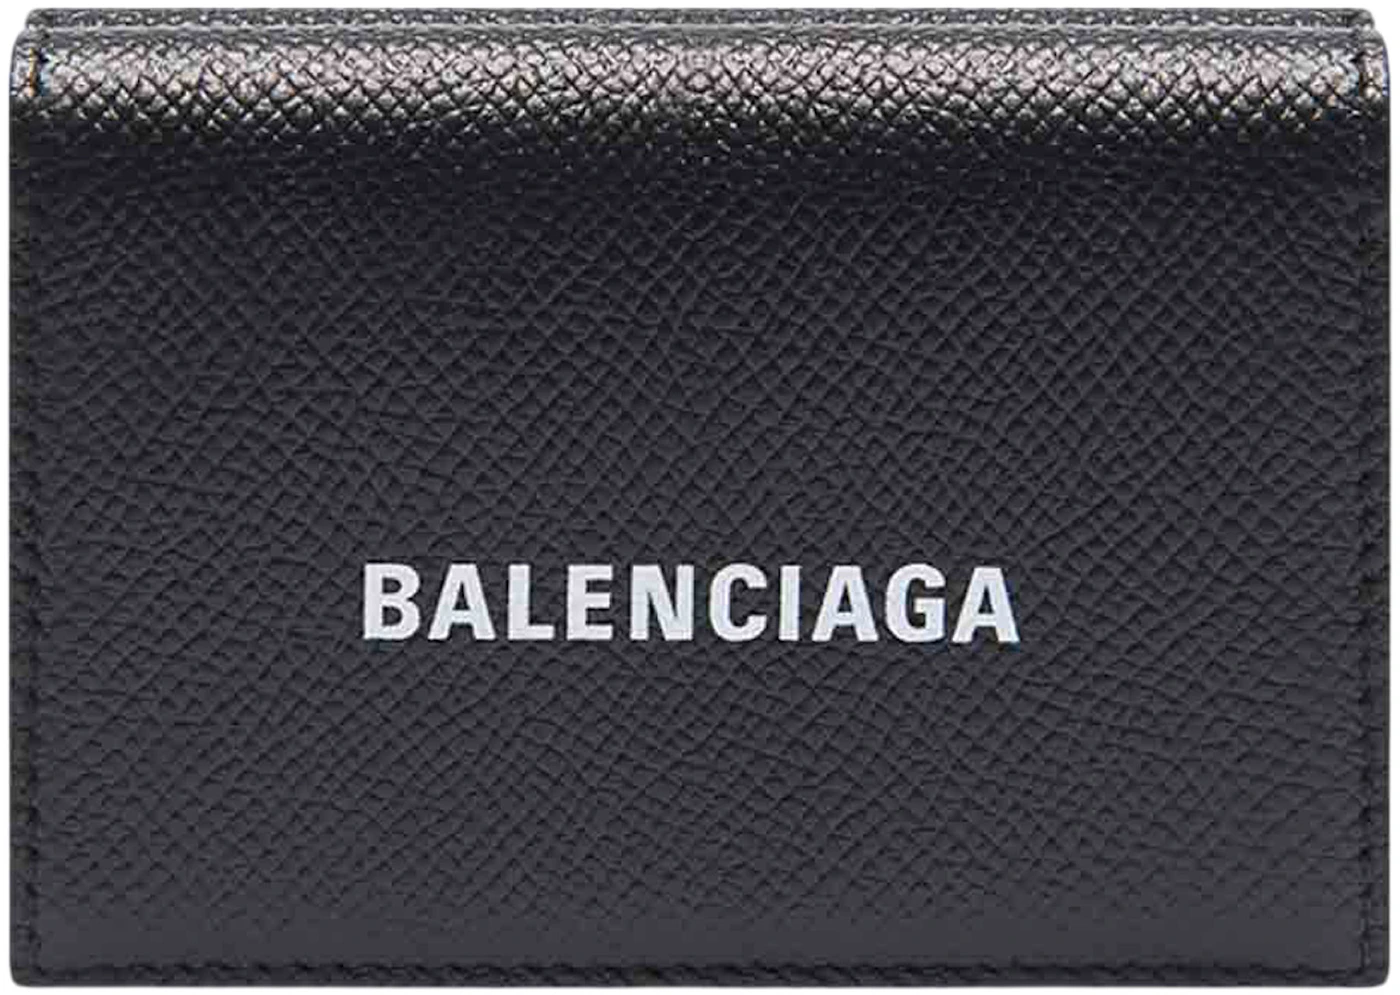 Balenciaga Men's Cash Wallet Mini Black/White in Grained Calfskin ...